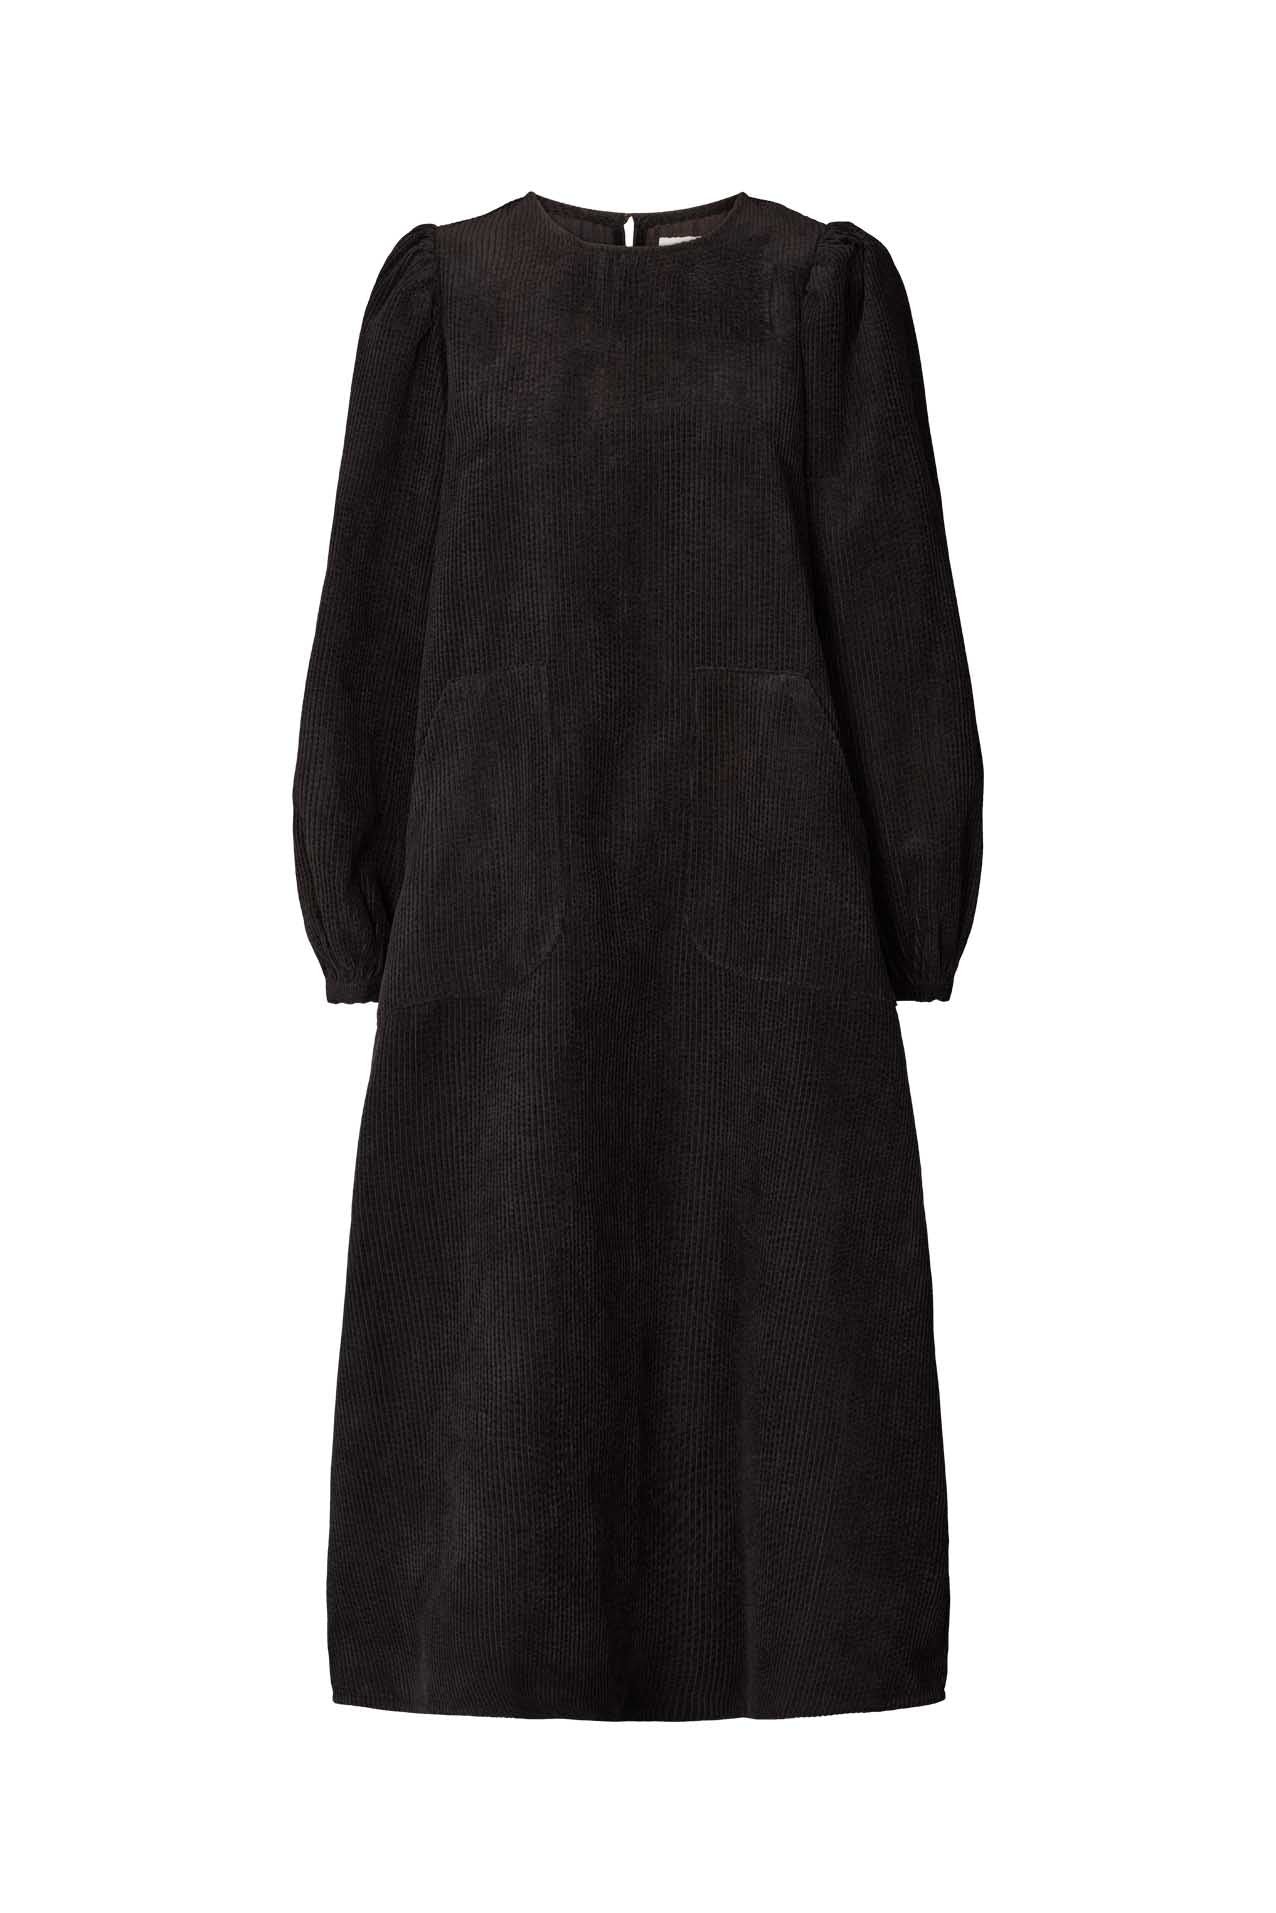 Lollys Laundry Lucas Dress Dress 99 Black